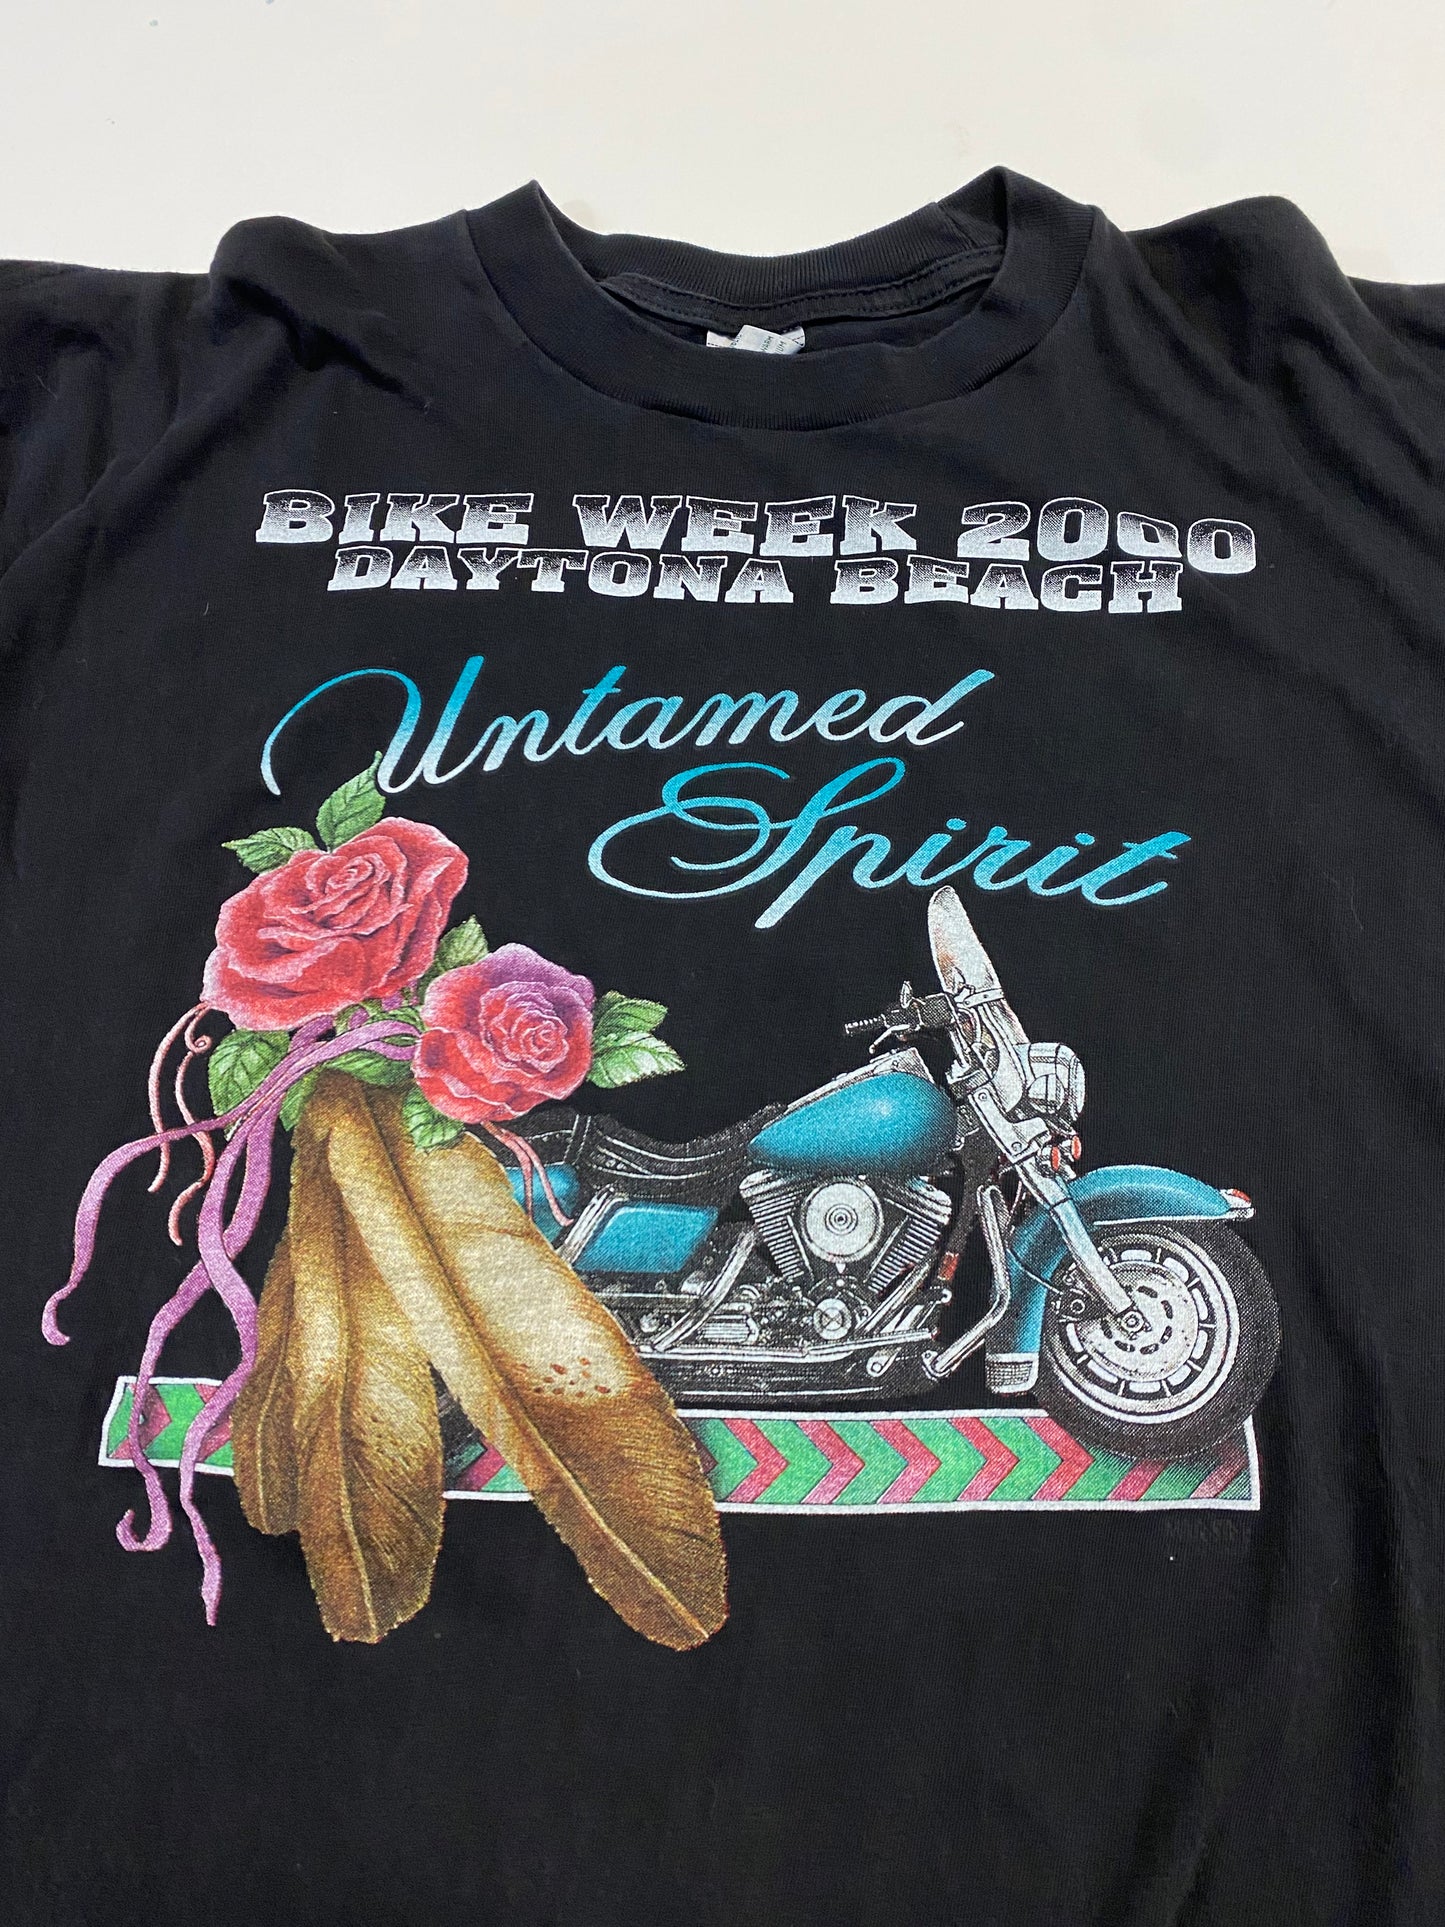 2000 Daytona Bike Week “Untamed Spirit” T-Shirt XL